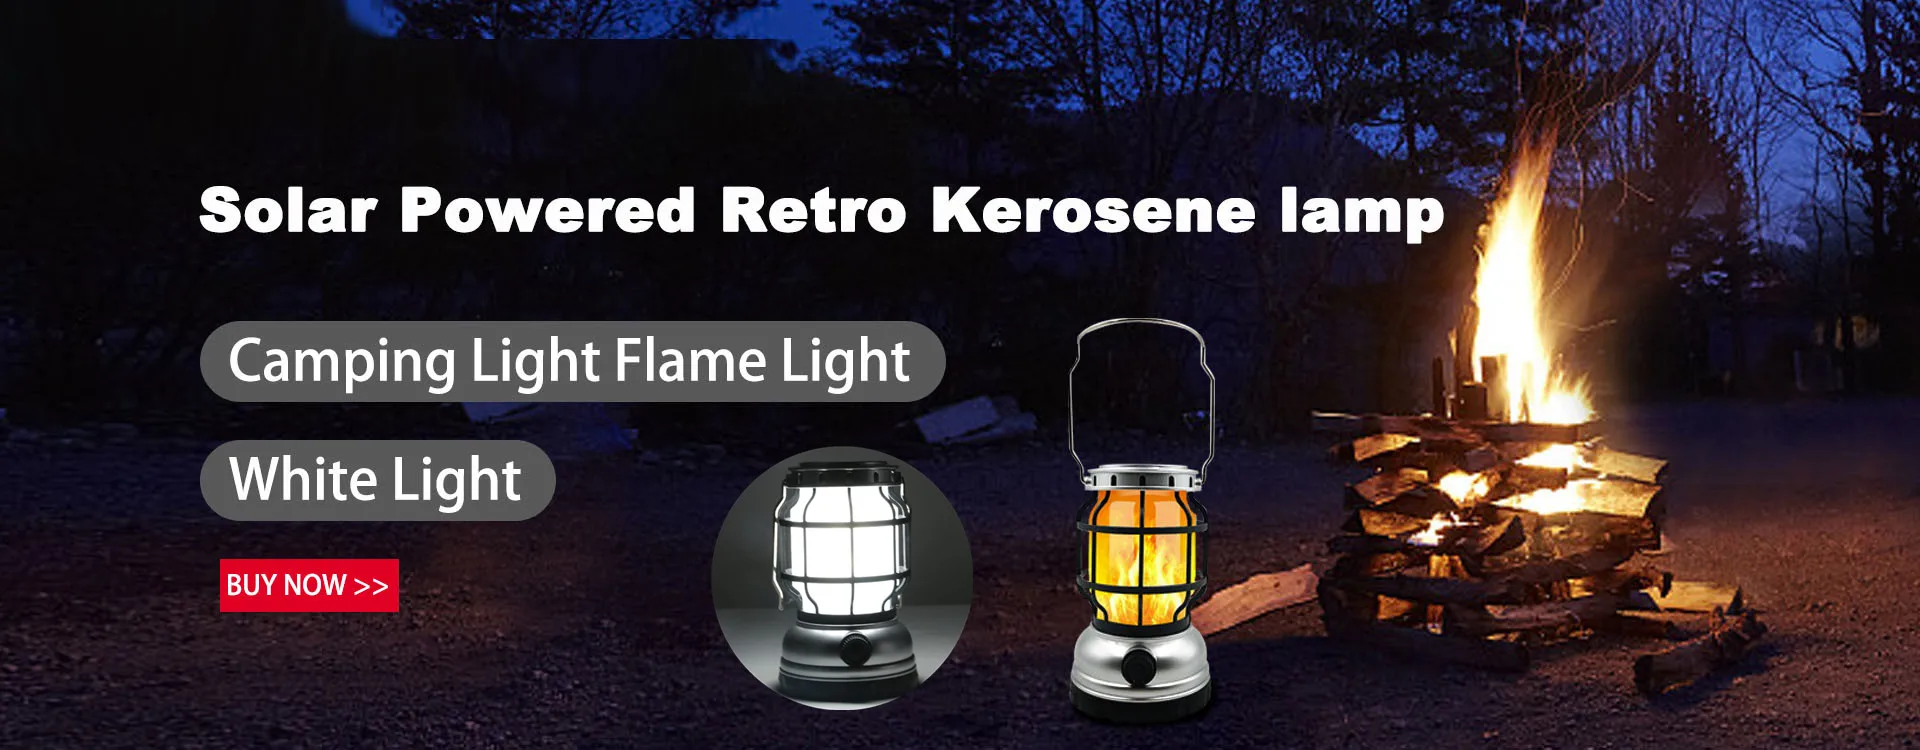 [30 W 36 LED] Lanfu - Focos LED portátiles para trabajo al aire libre,  camping, pesca, reparación de iluminación, baterías de litio recargables